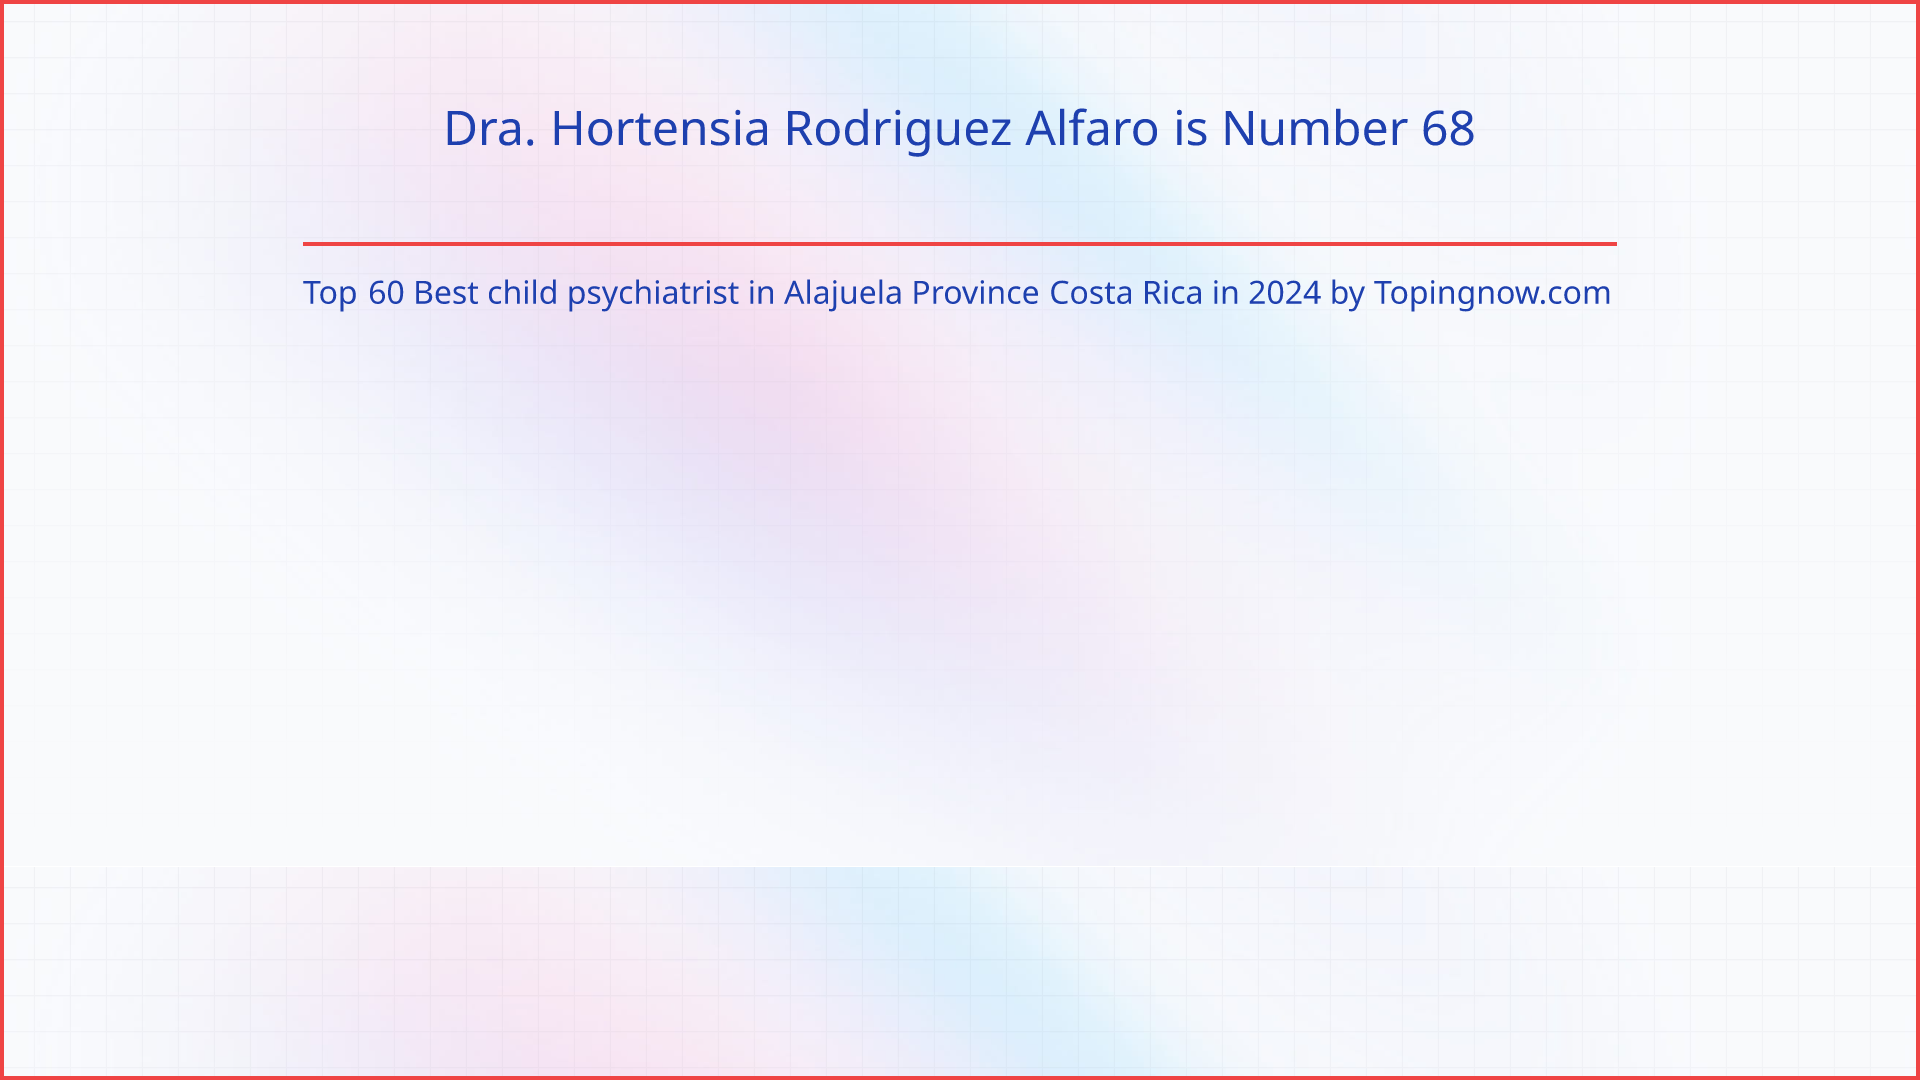 Dra. Hortensia Rodriguez Alfaro: Top 60 Best child psychiatrist in Alajuela Province Costa Rica in 2024